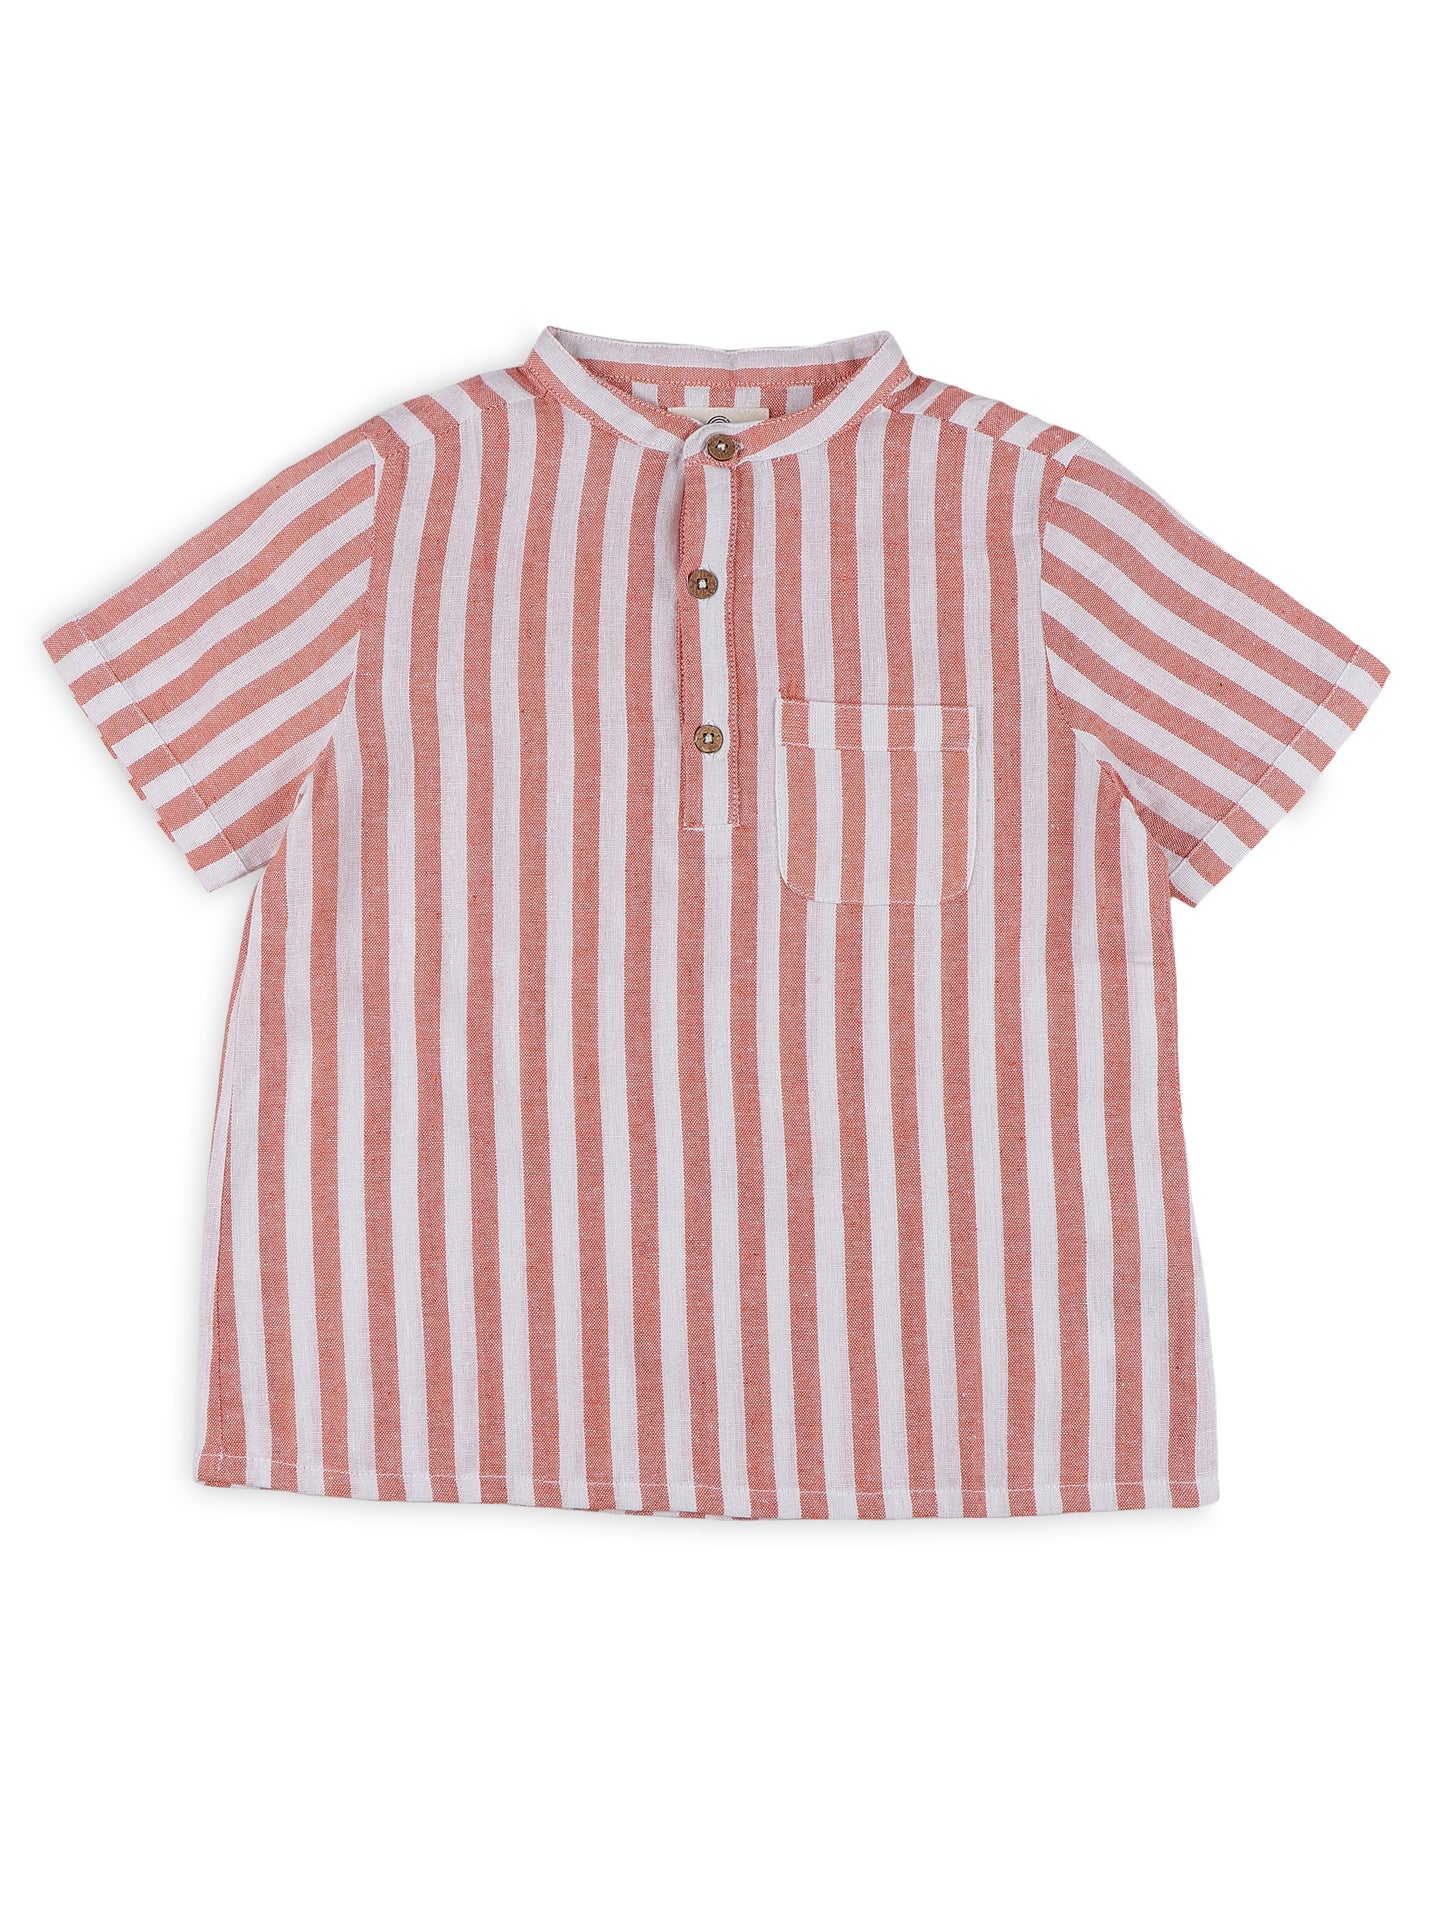 Mandarin Style Linen Clothing Sets for Boys- Orange & Navy